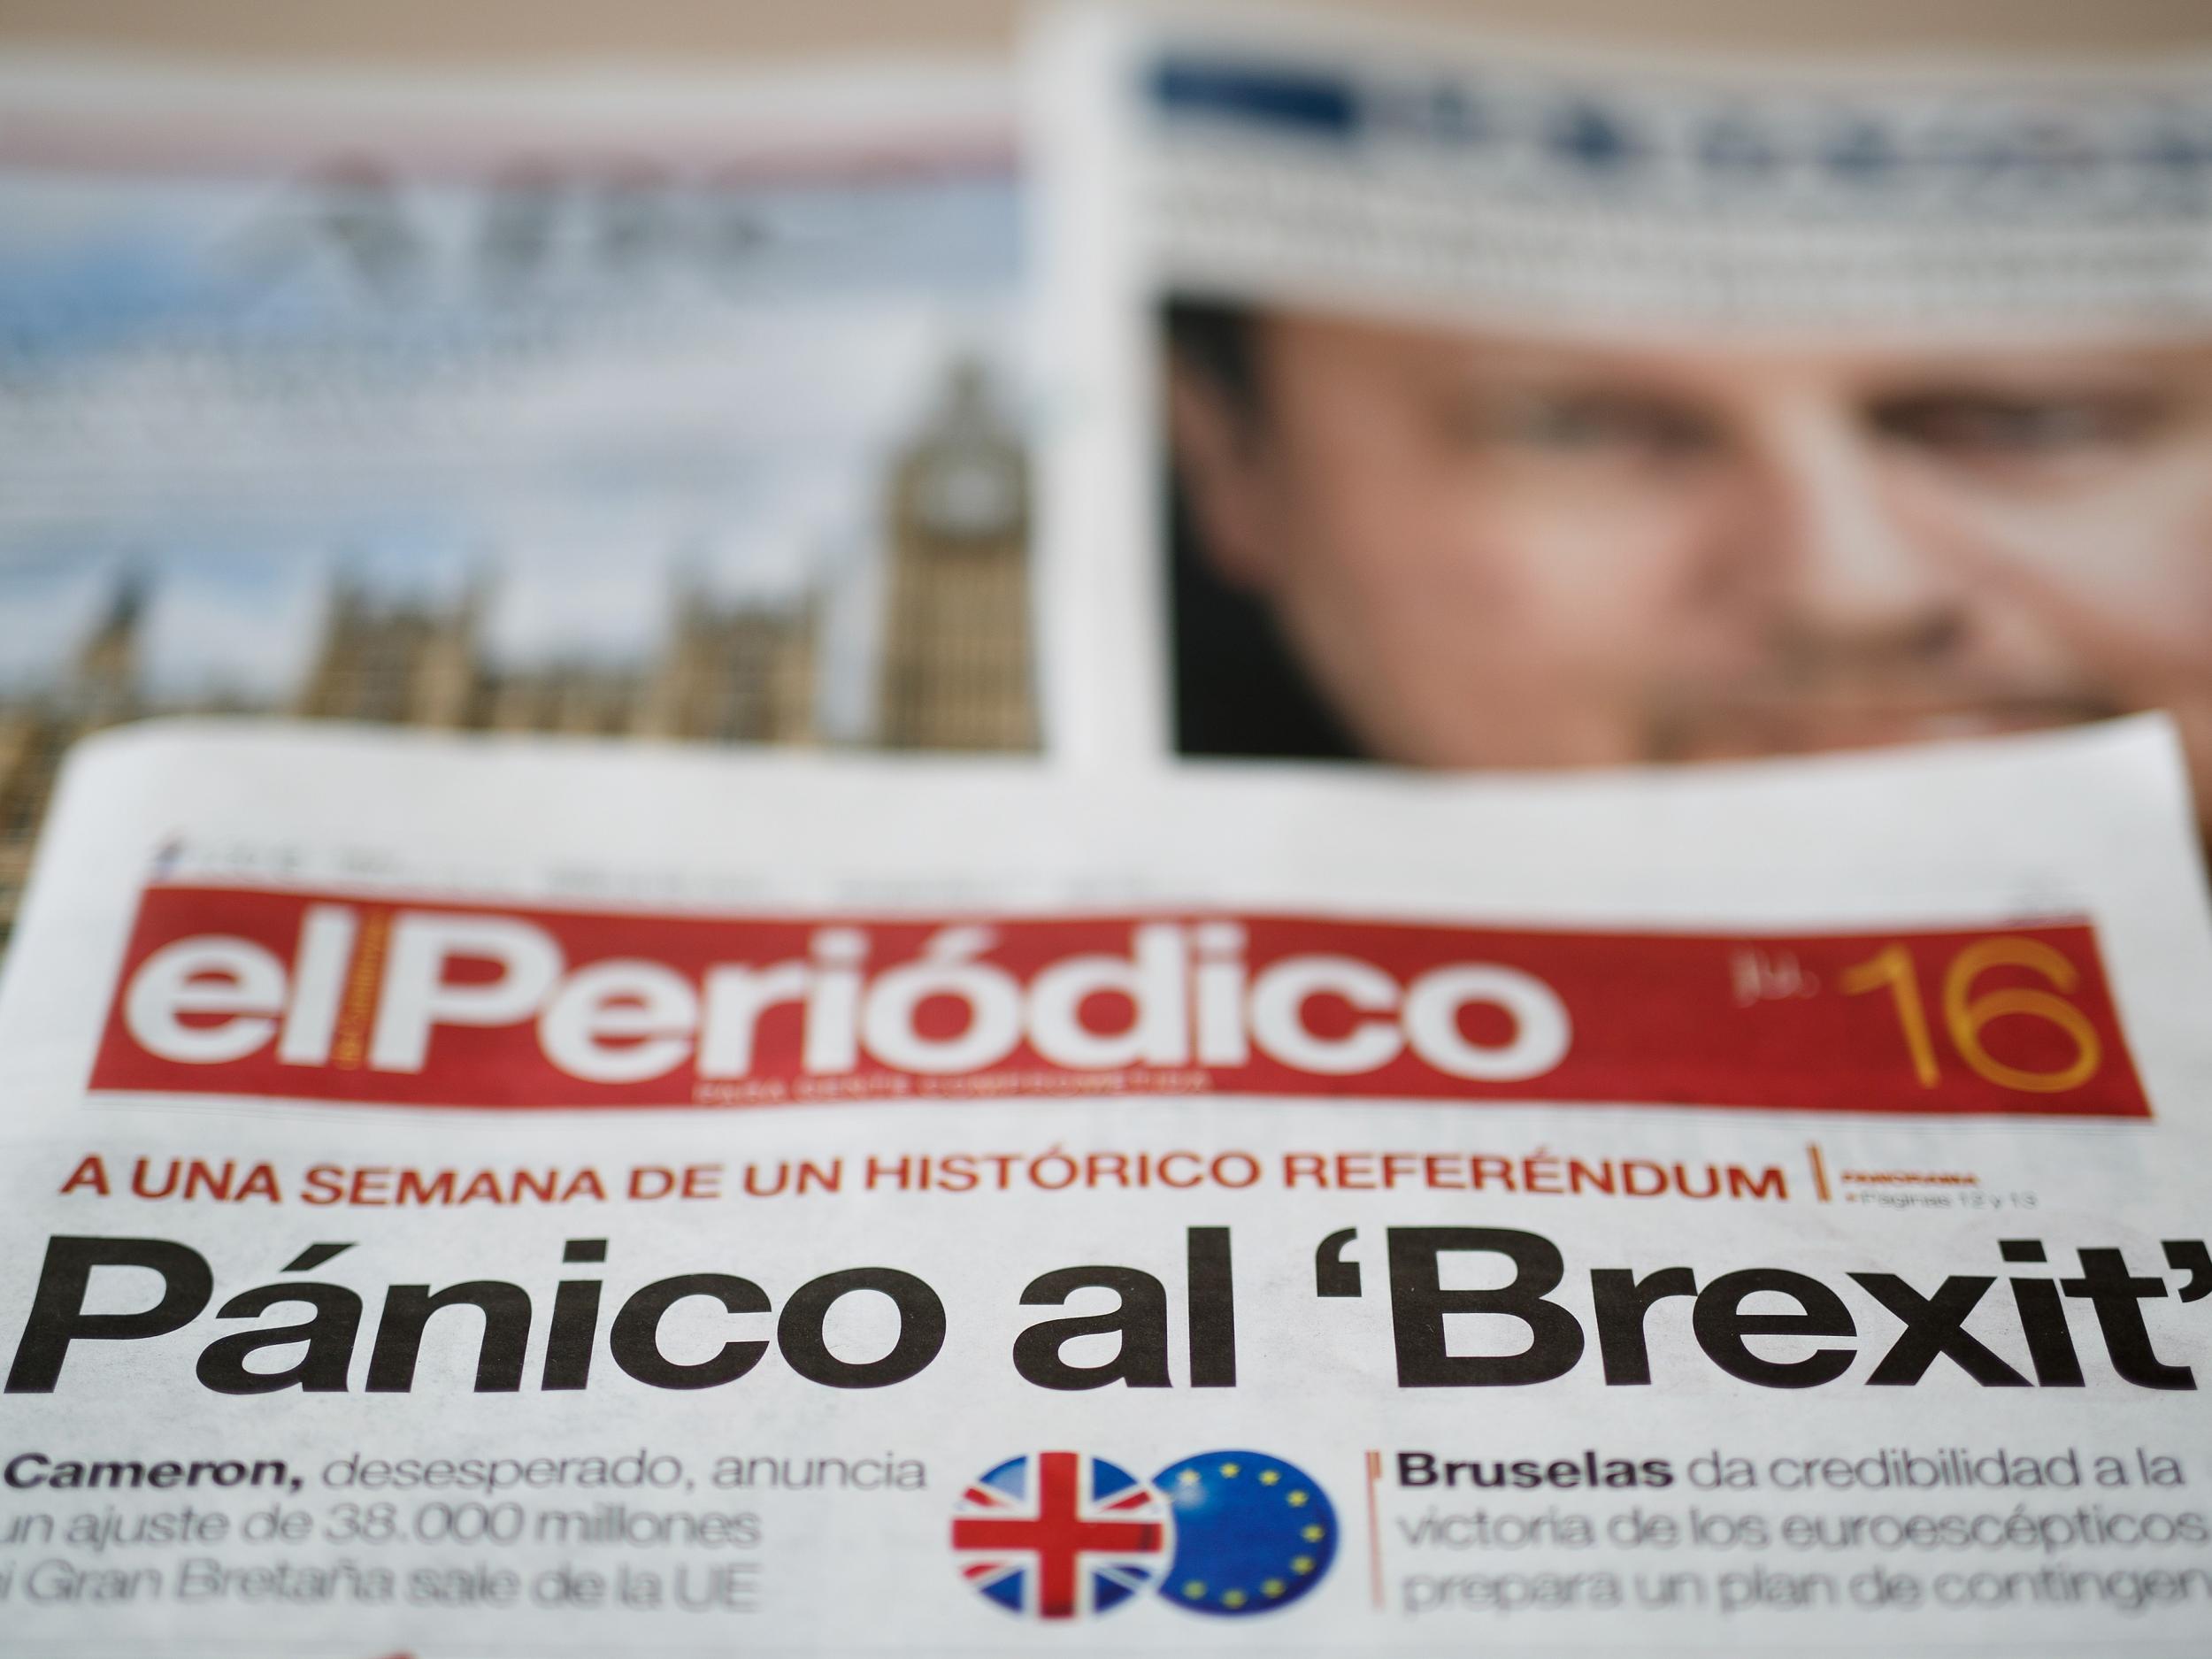 Spanish newspaper El Periodico reports on 'El Brexit'